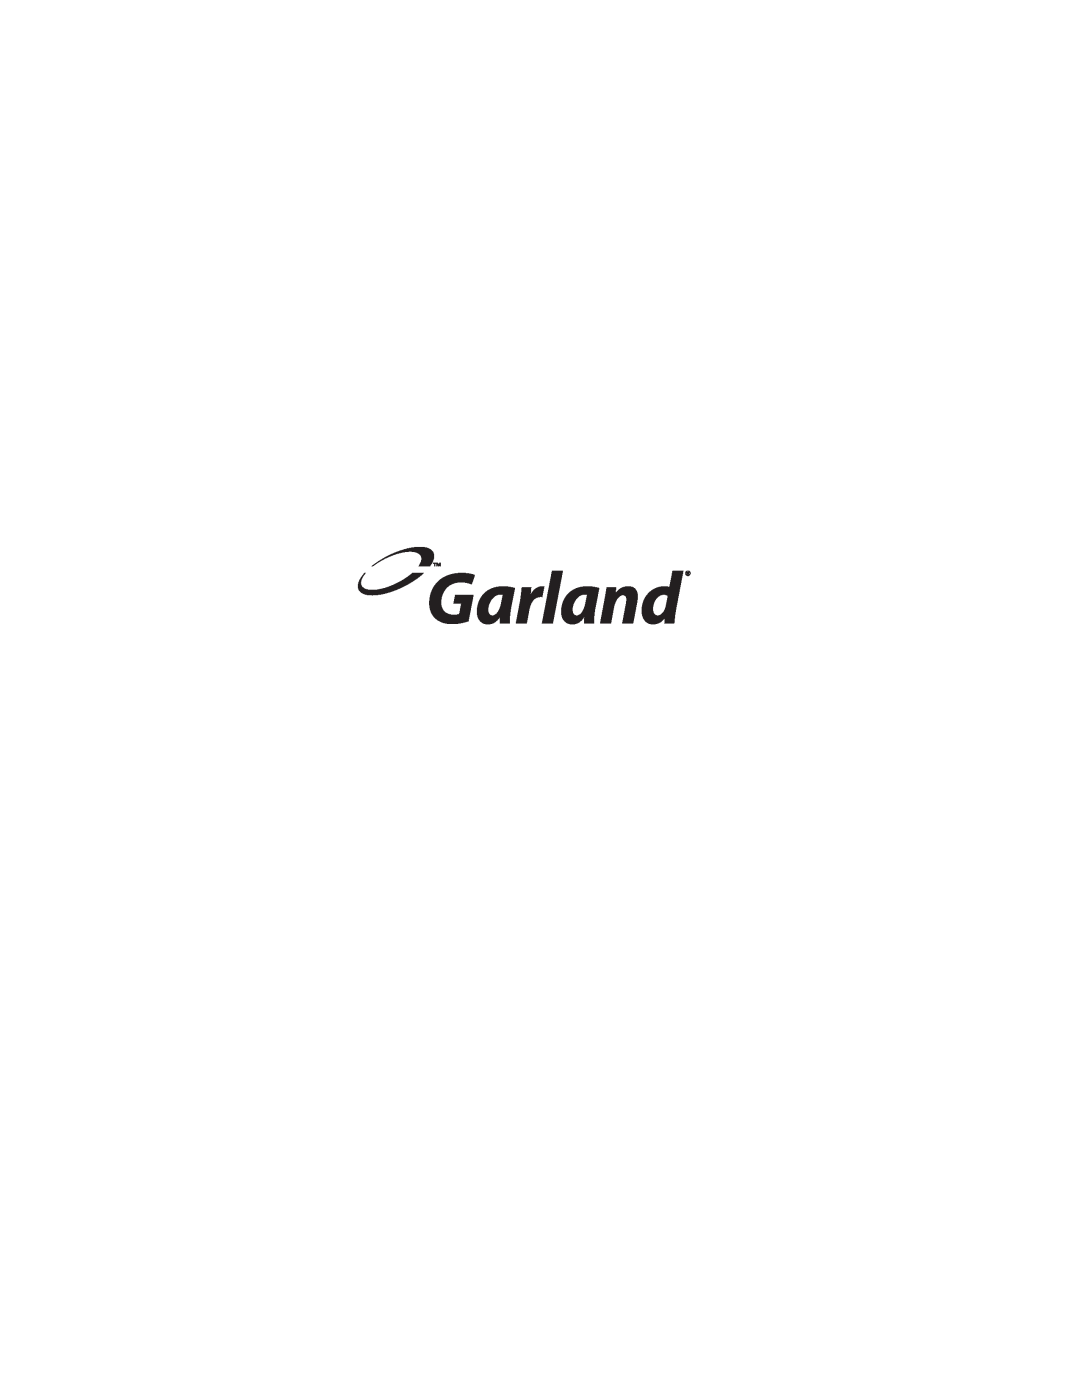 Garland S18-FS installation instructions 